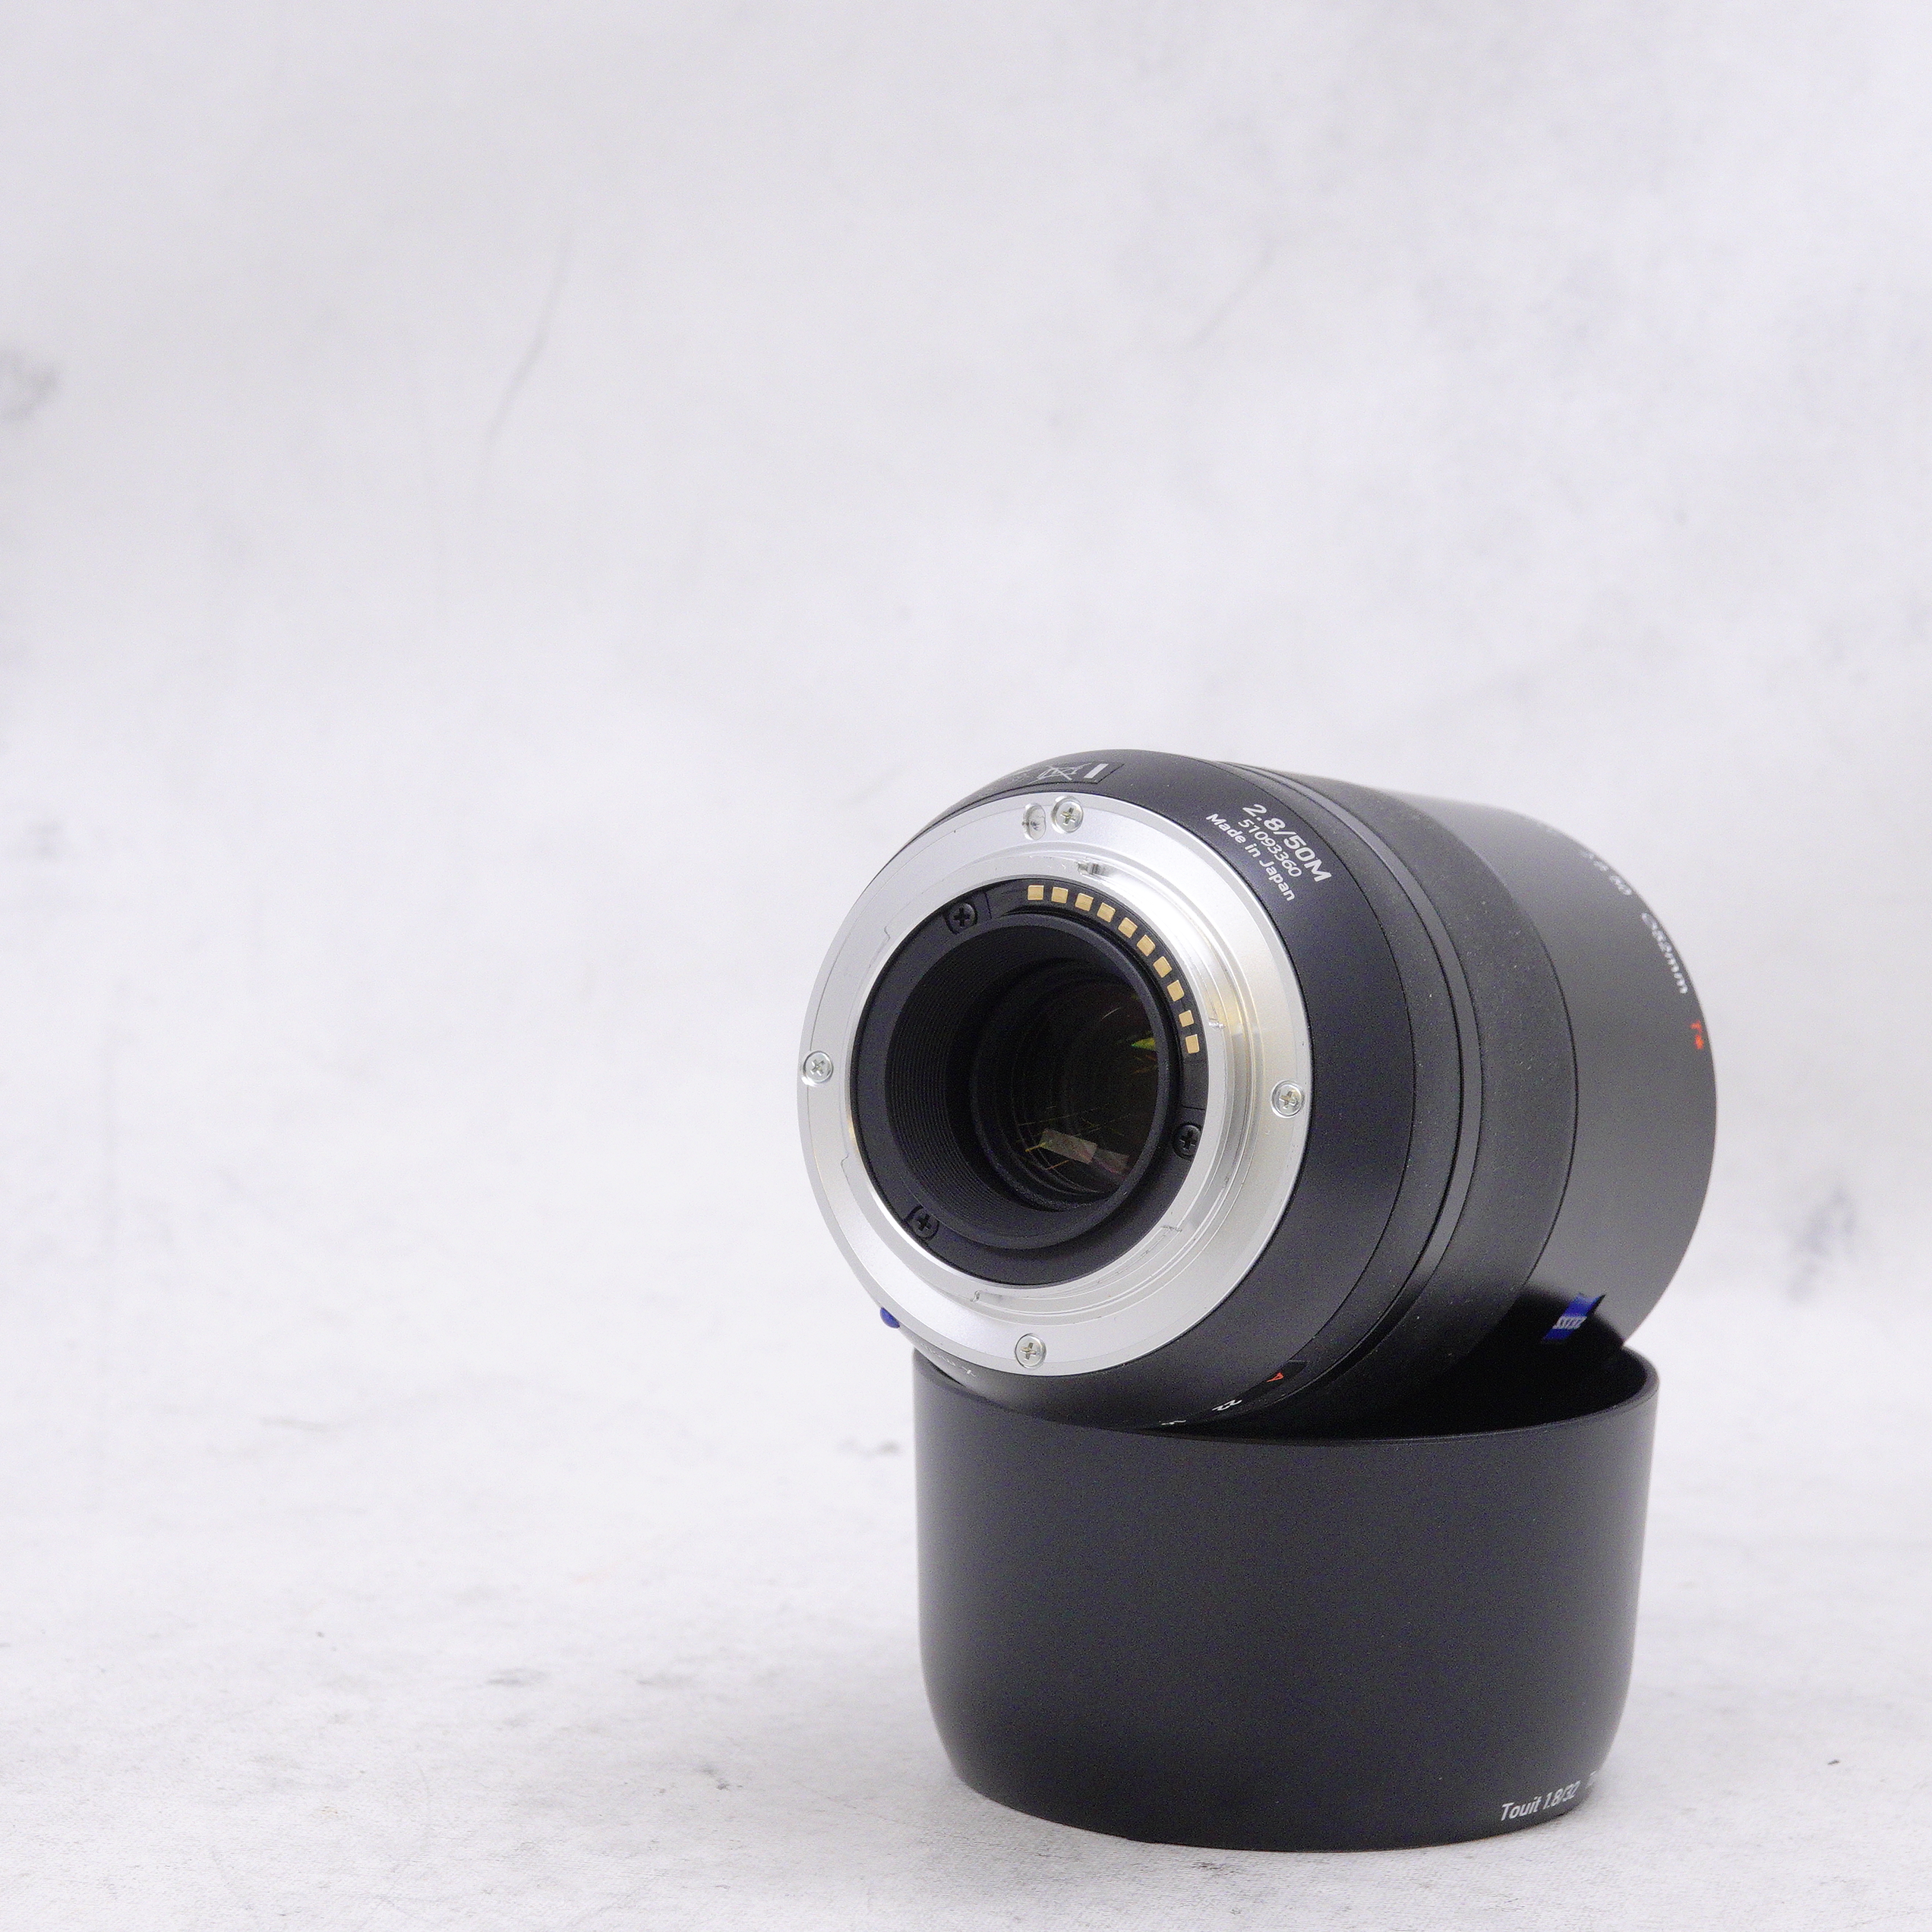 ZEISS Touit 50mm f/2.8M Macro Lens for FUJIFILM X - USADO